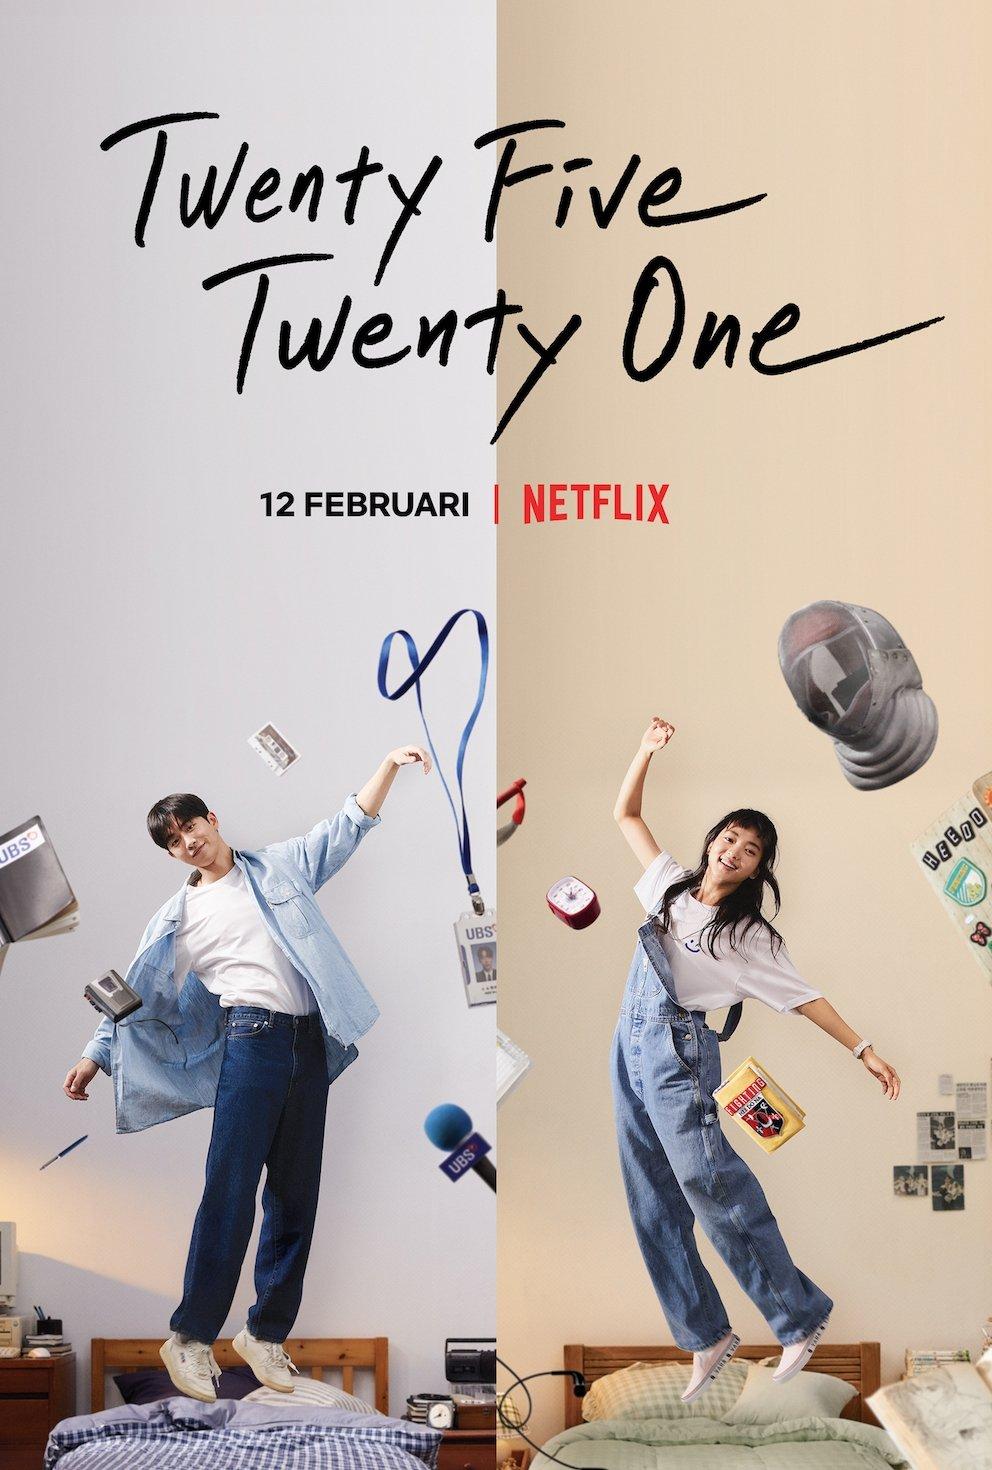 Poster chính thức của bộ phim Twenty Five, Twenty One. Ảnh: Internet